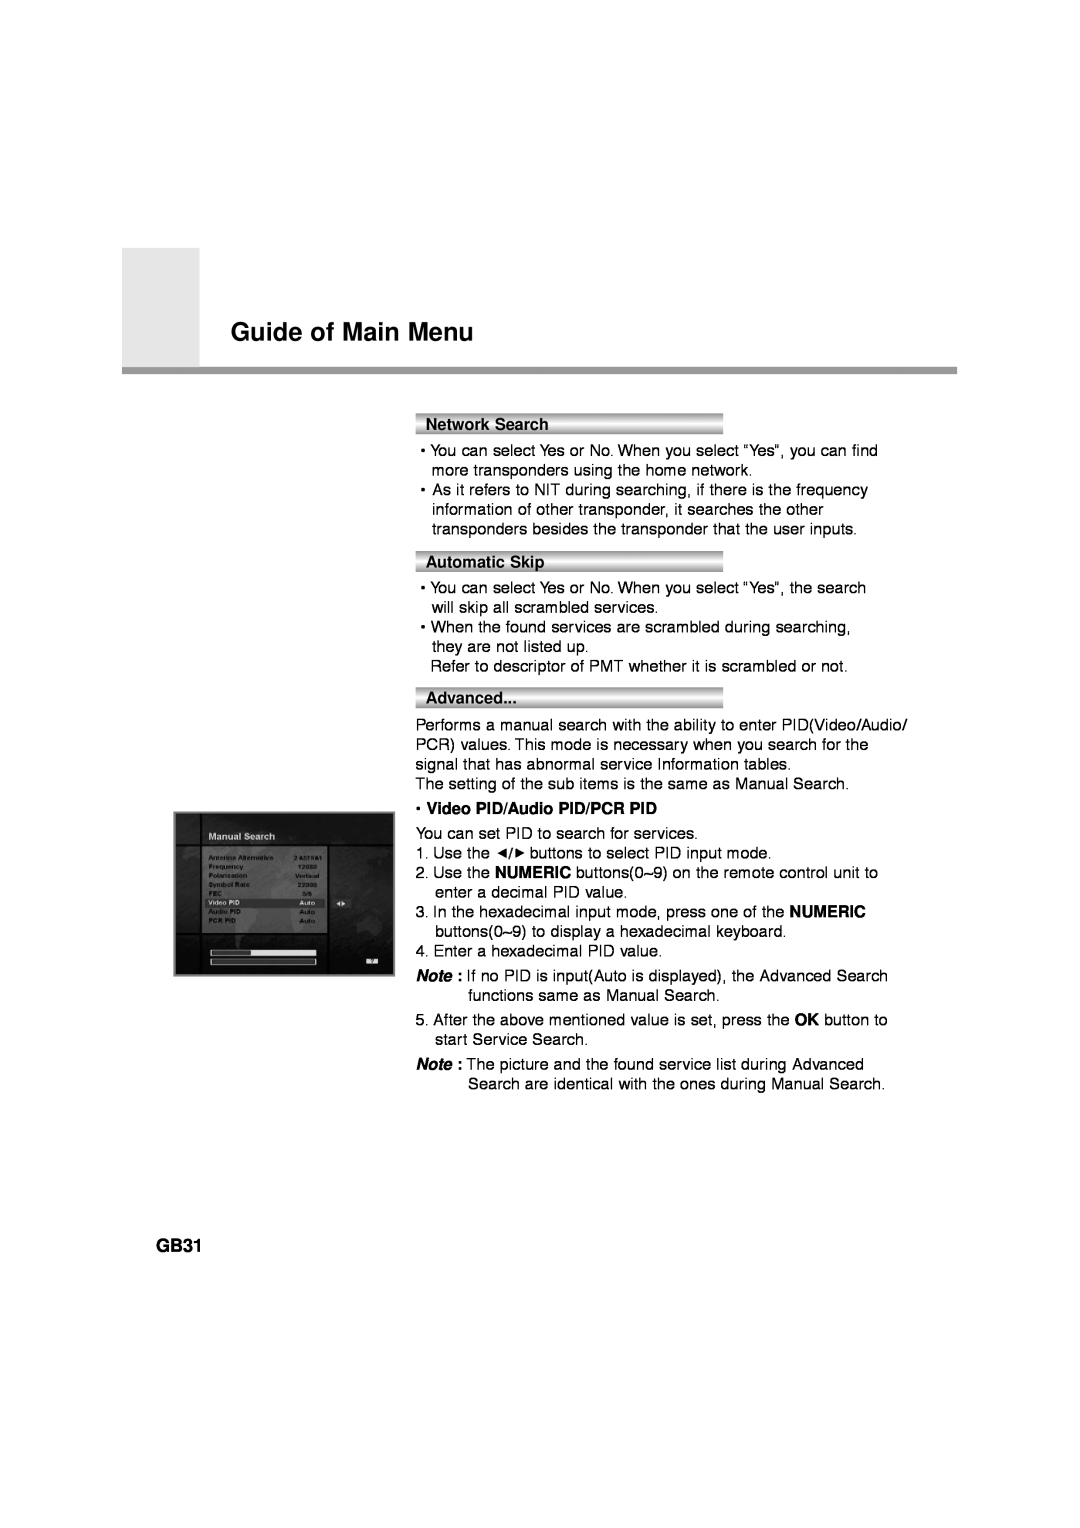 Humax NA-FOX, F1-FOX manual GB31, Network Search, Automatic Skip, Advanced, Video PID/Audio PID/PCR PID, Guide of Main Menu 